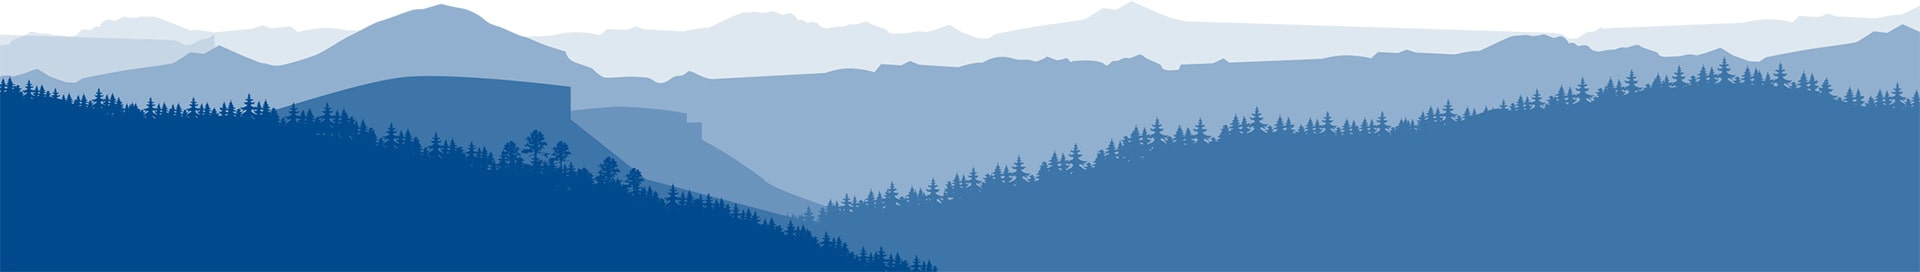 Blue illustration of Durango mountainscape